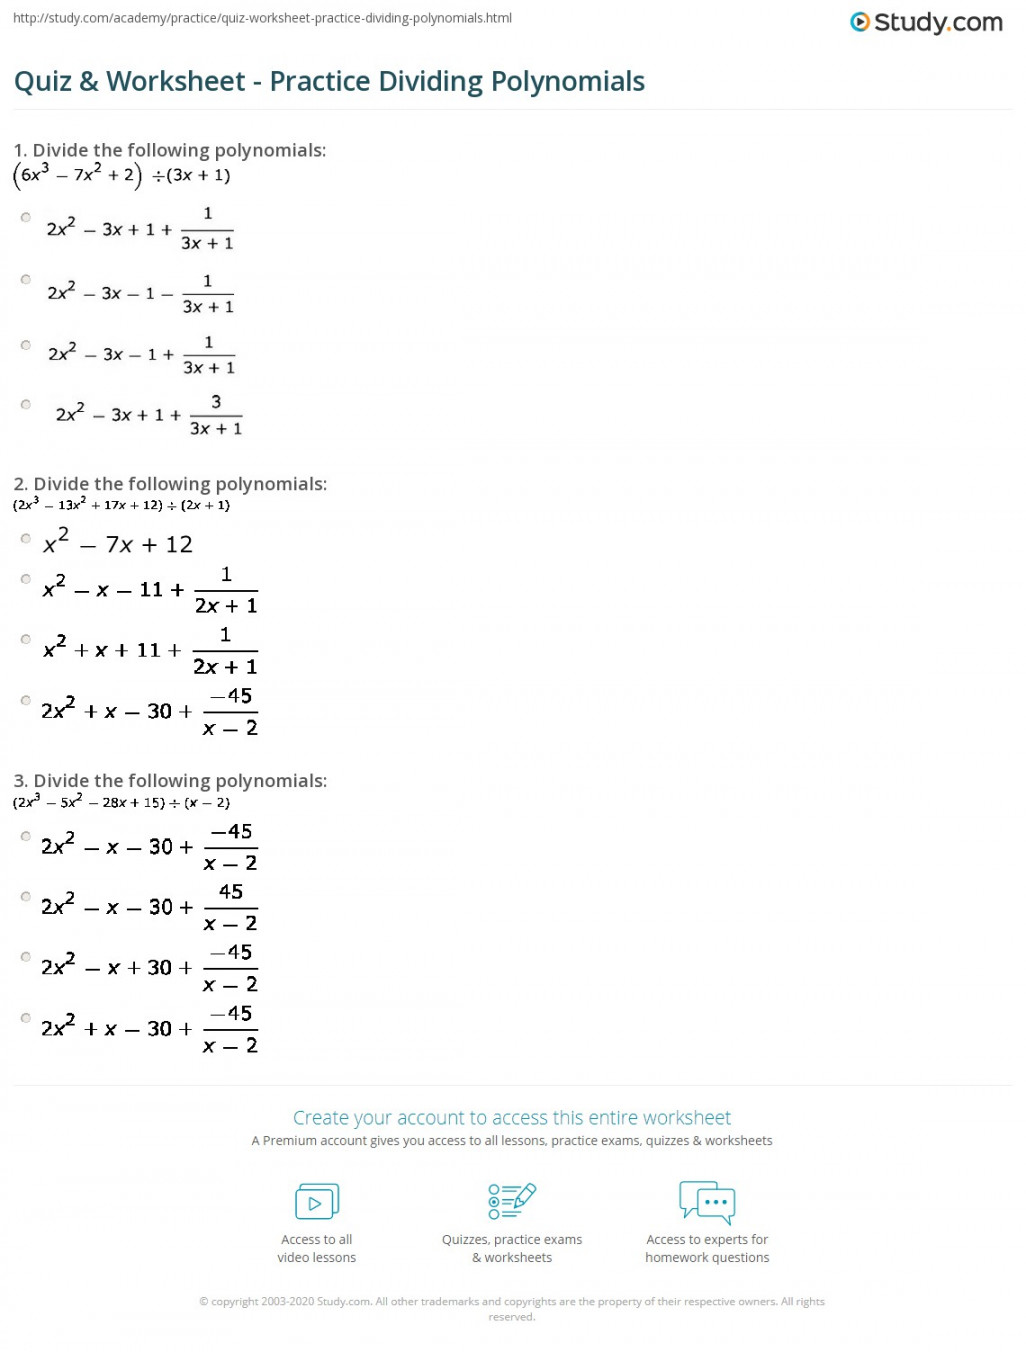 Quiz & Worksheet - Practice Dividing Polynomials  Study